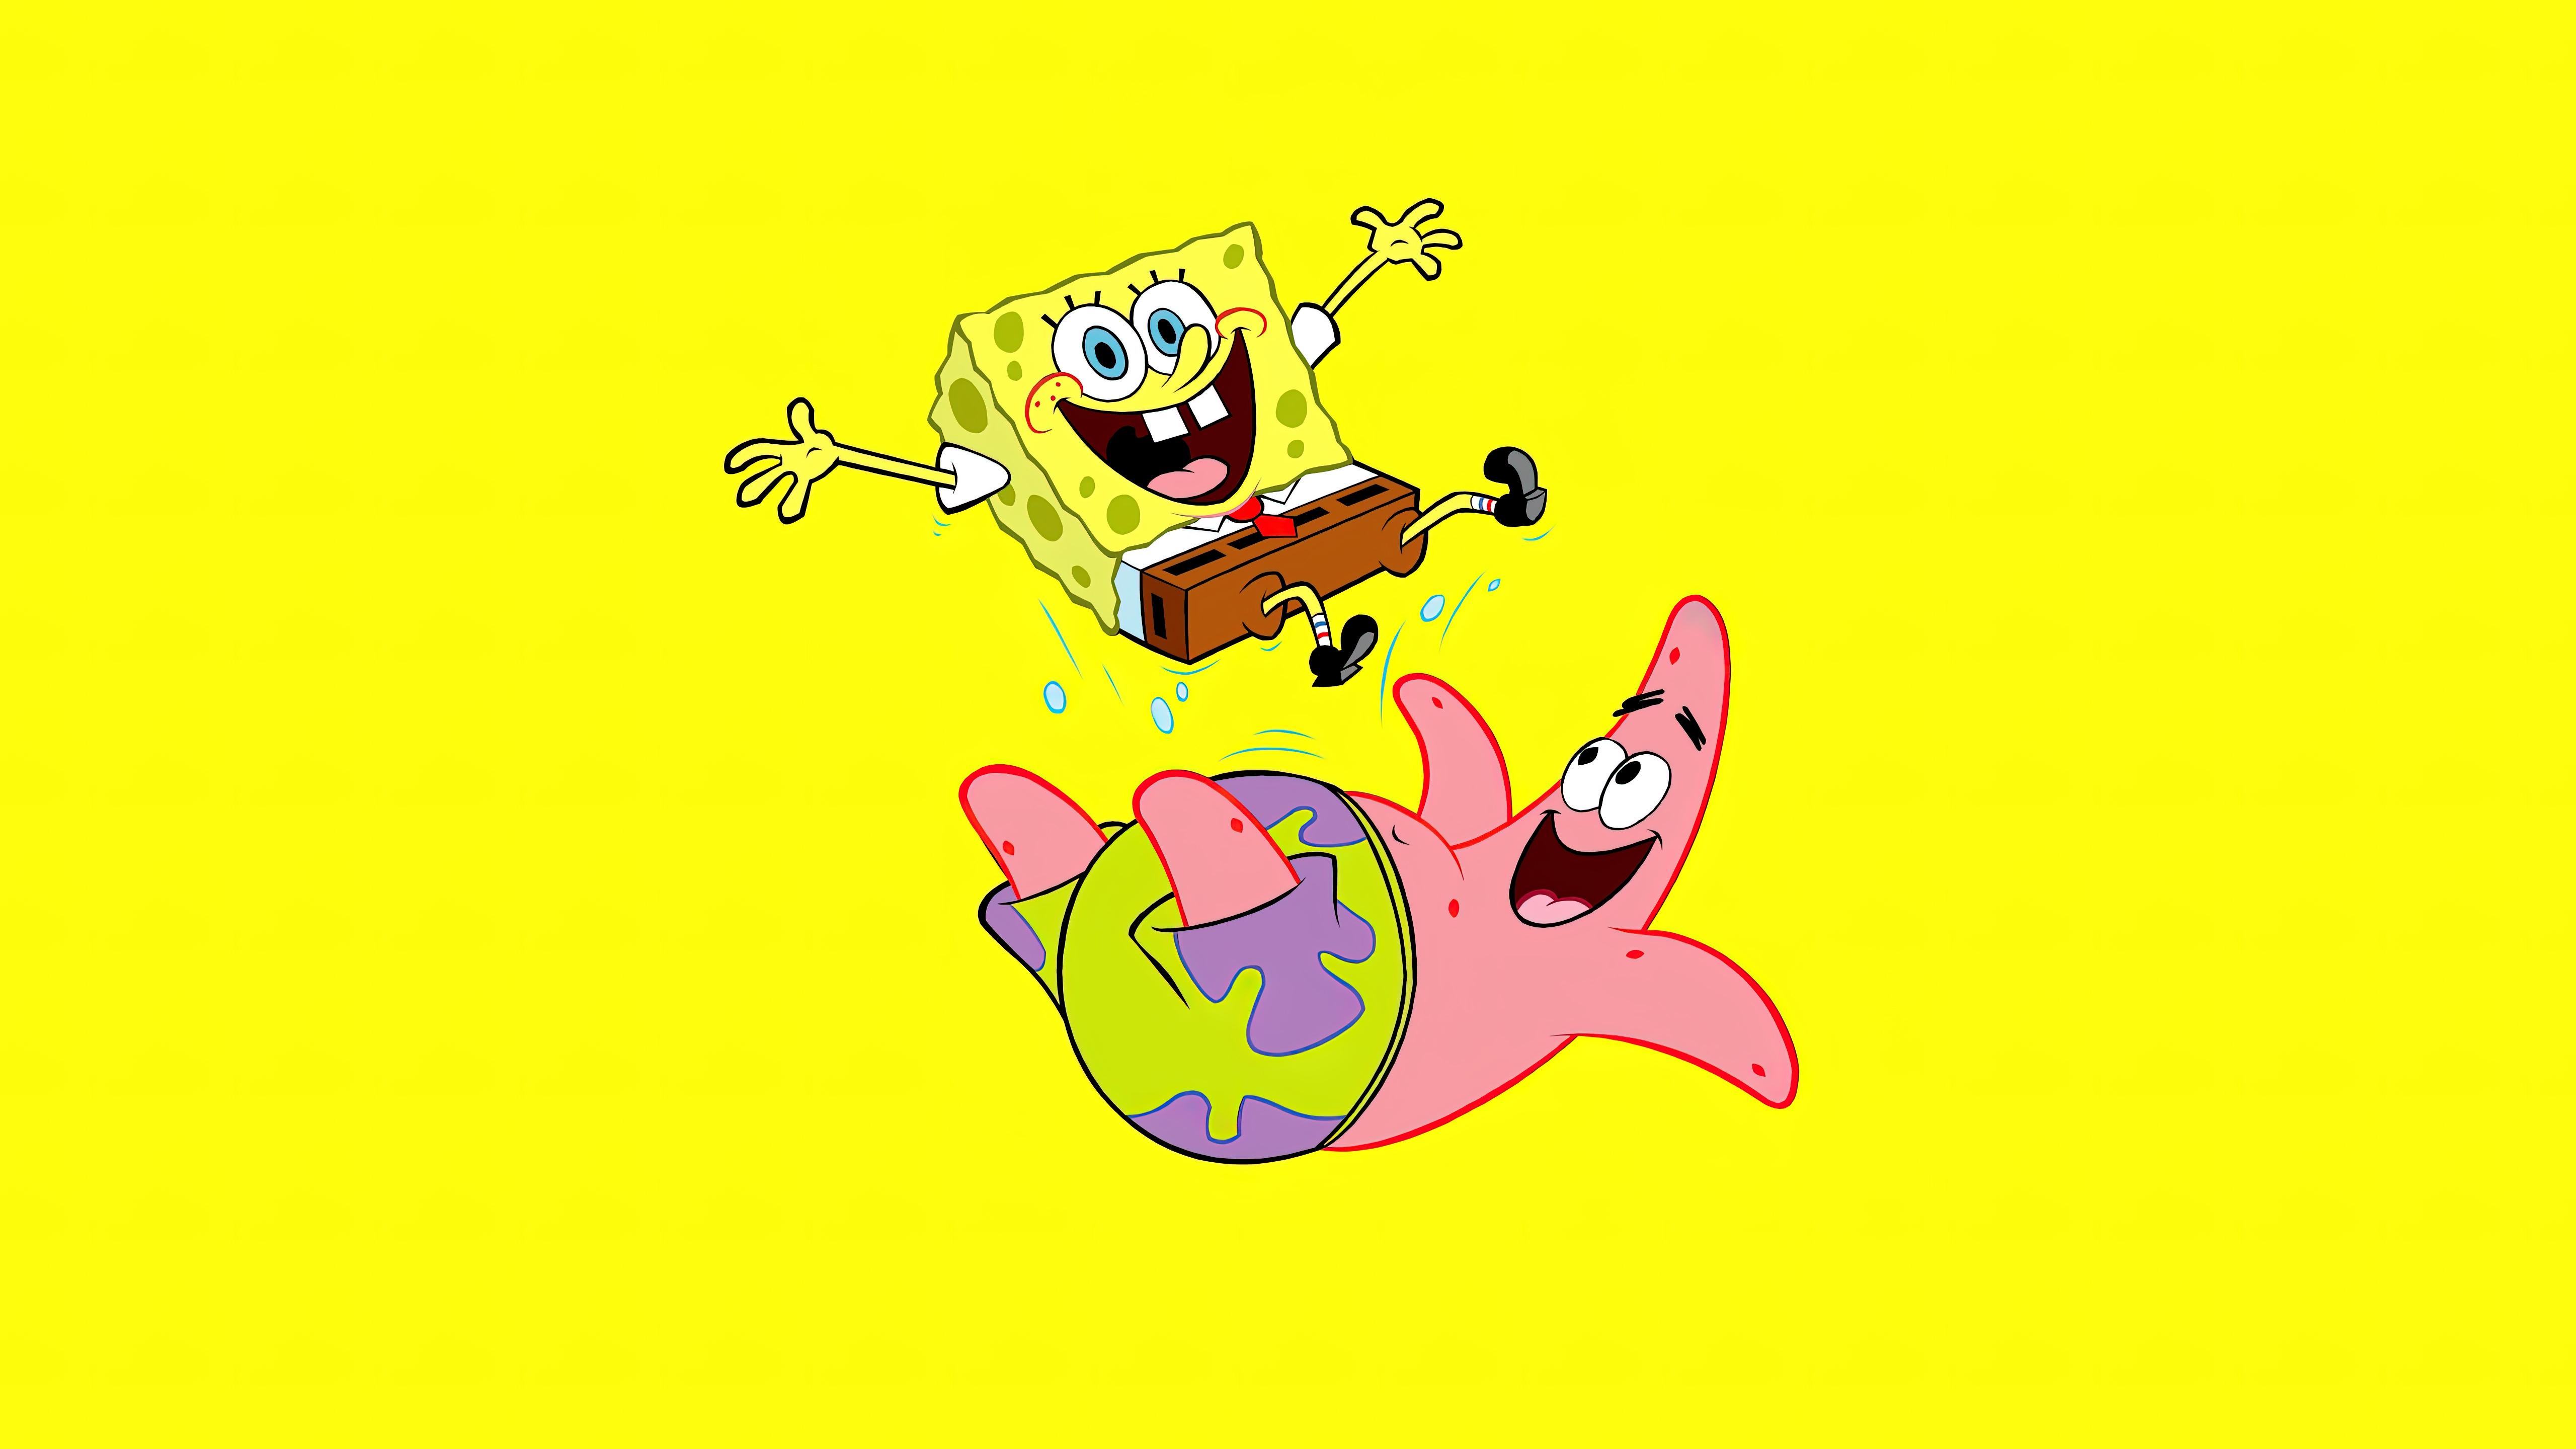 HD wallpaper, Yellow Background, Cartoon, Patrick Star, Spongebob, Spongebob Squarepants, 5K